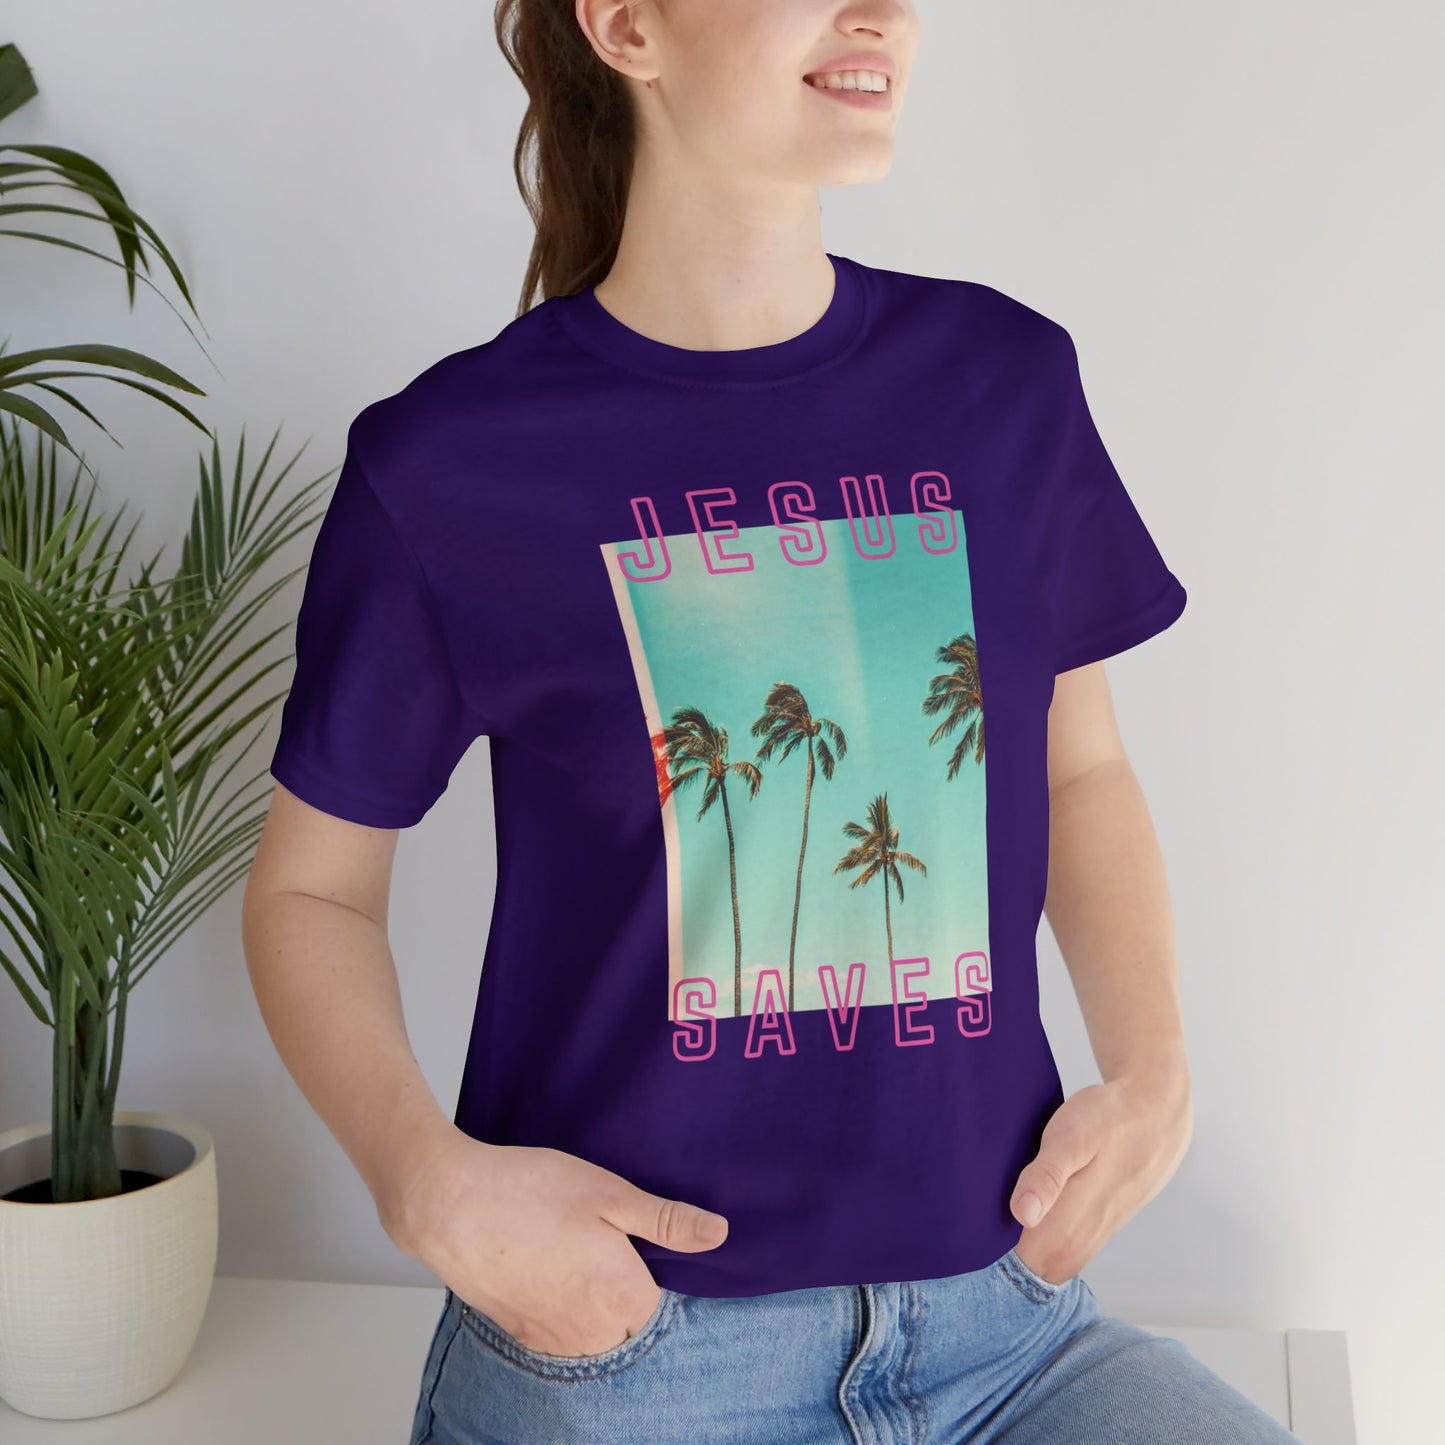 Cali Jesus Saves T-Shirt - LA Palm Tree Beach SoCal - Bright Color Tees